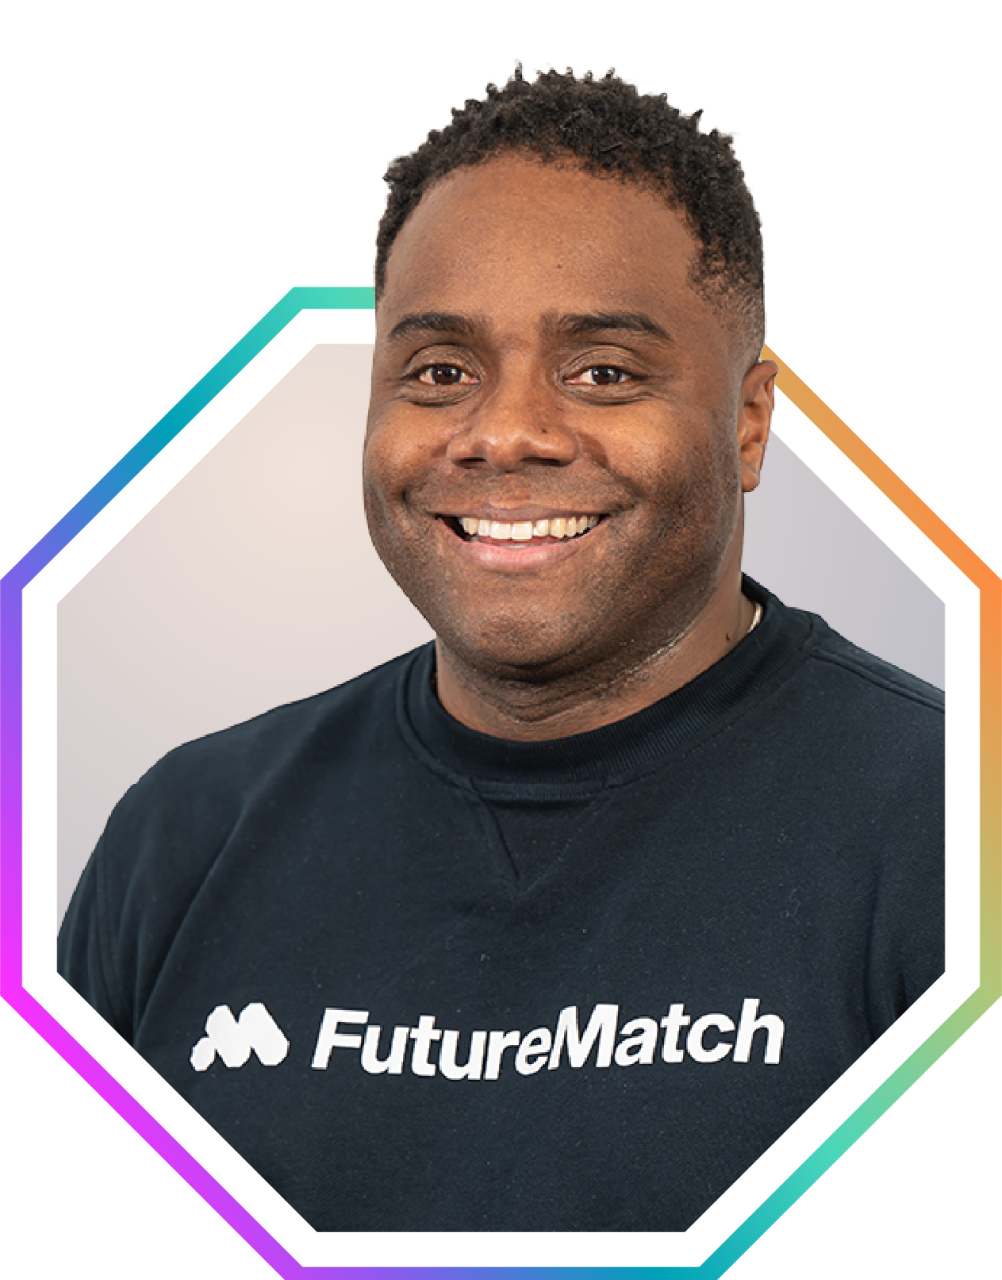 Future Match CEO Kufa Matiya